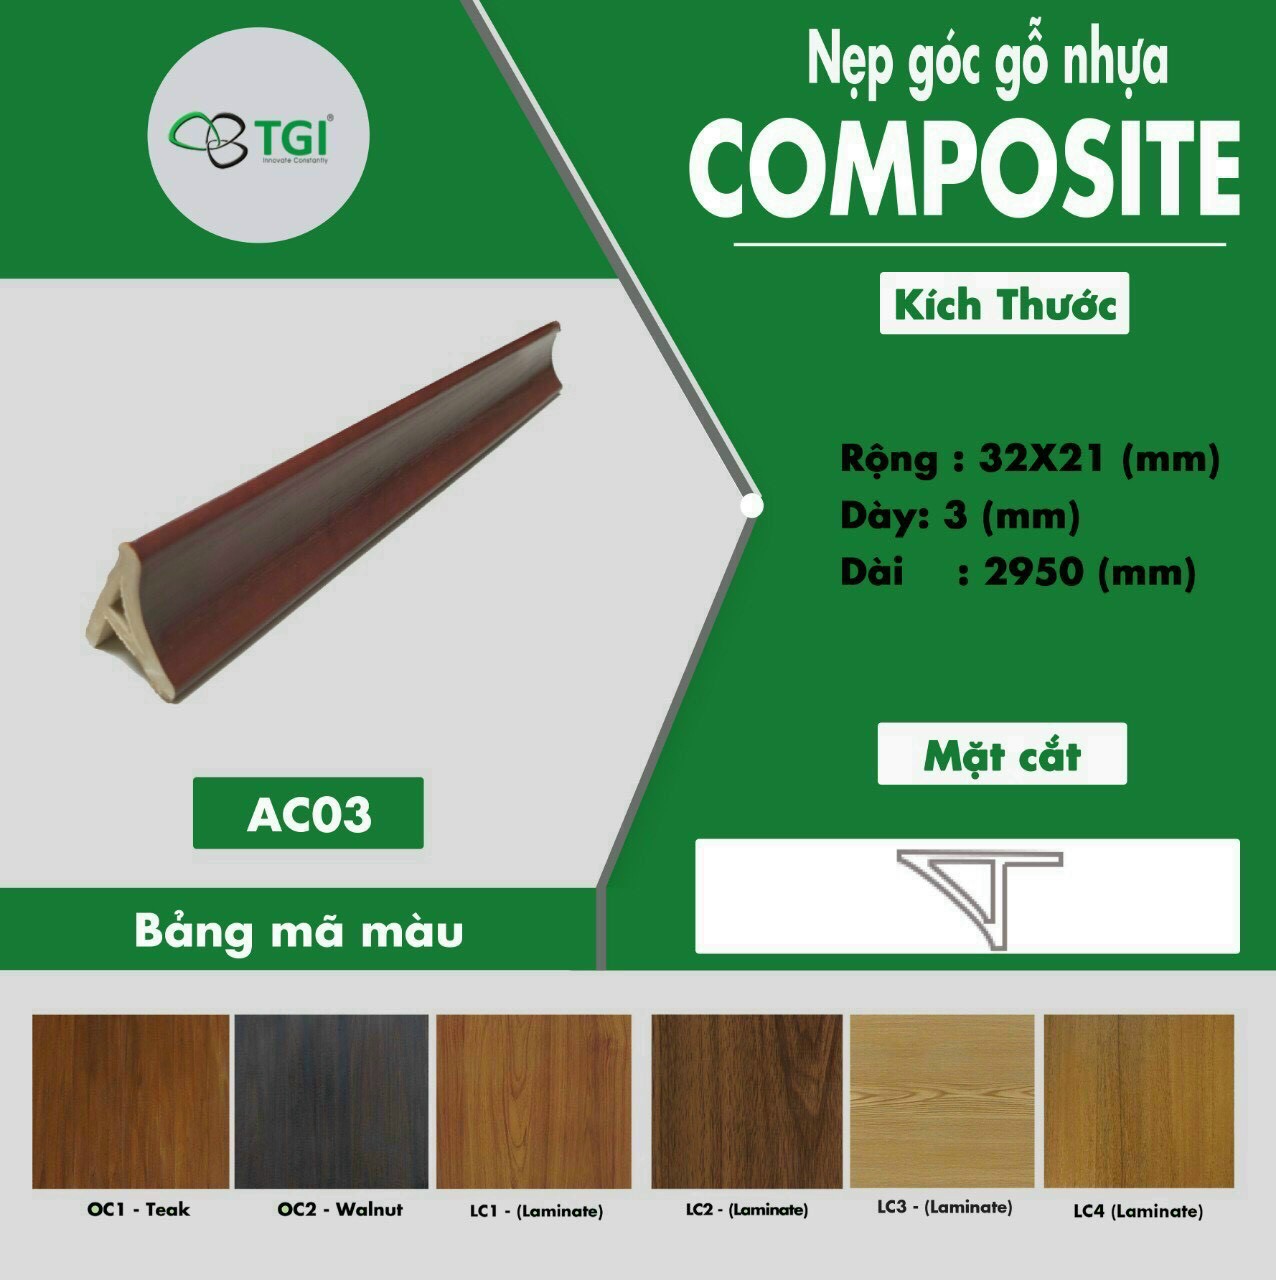 Nẹp Góc Gỗ Nhựa Composite AC03 - vatlieuoptuongpvc.vn